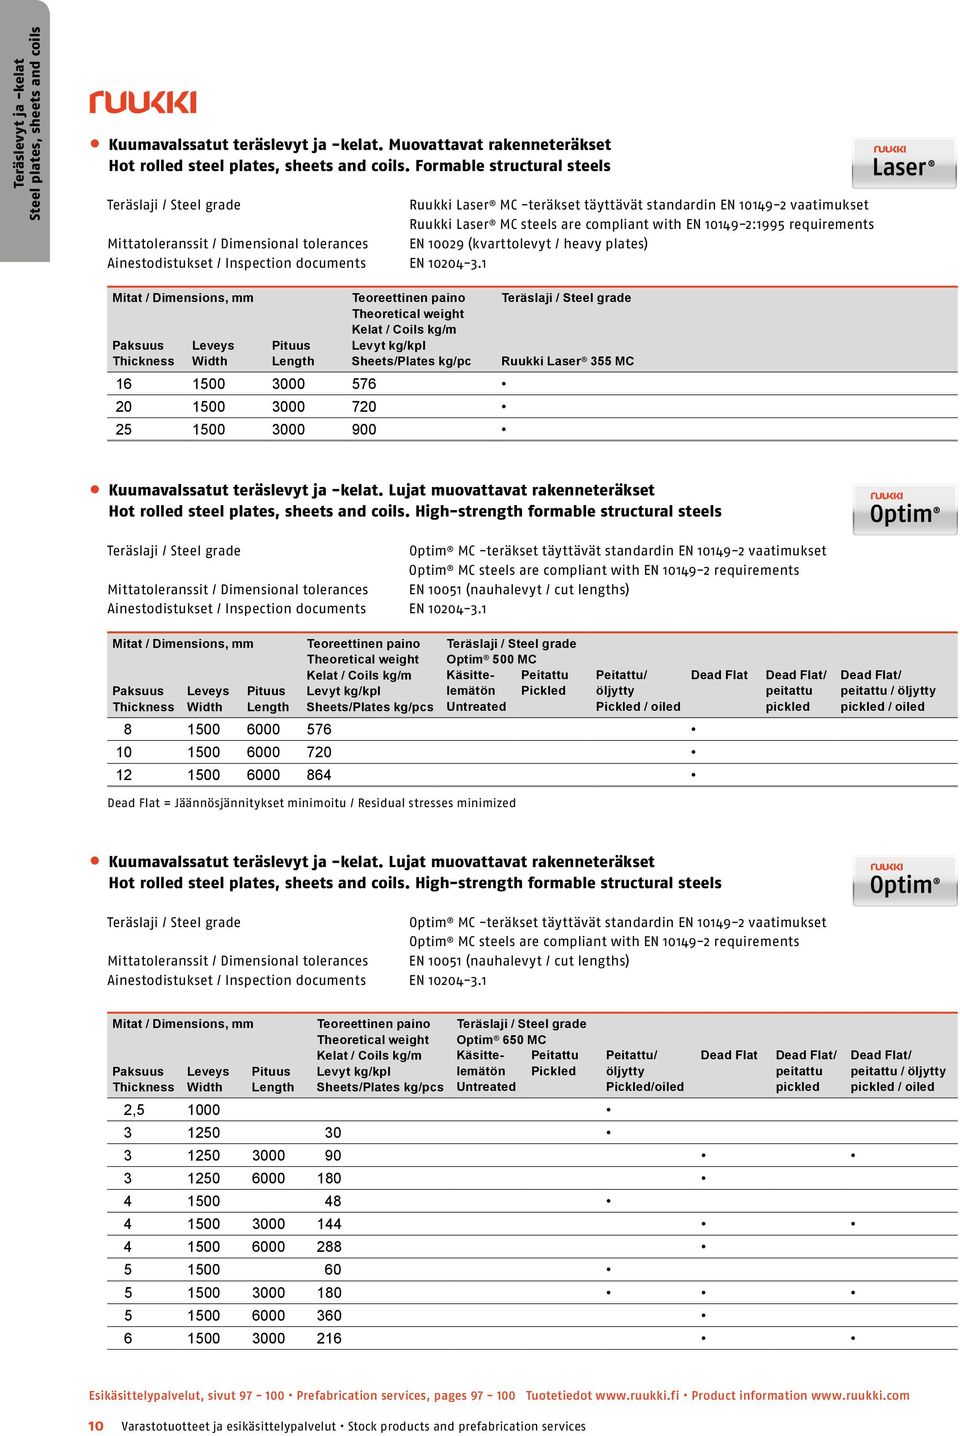 tolerances EN 10029 (kvarttolevyt / heavy plates) Ainestodistukset / Inspection documents EN 10204-3.